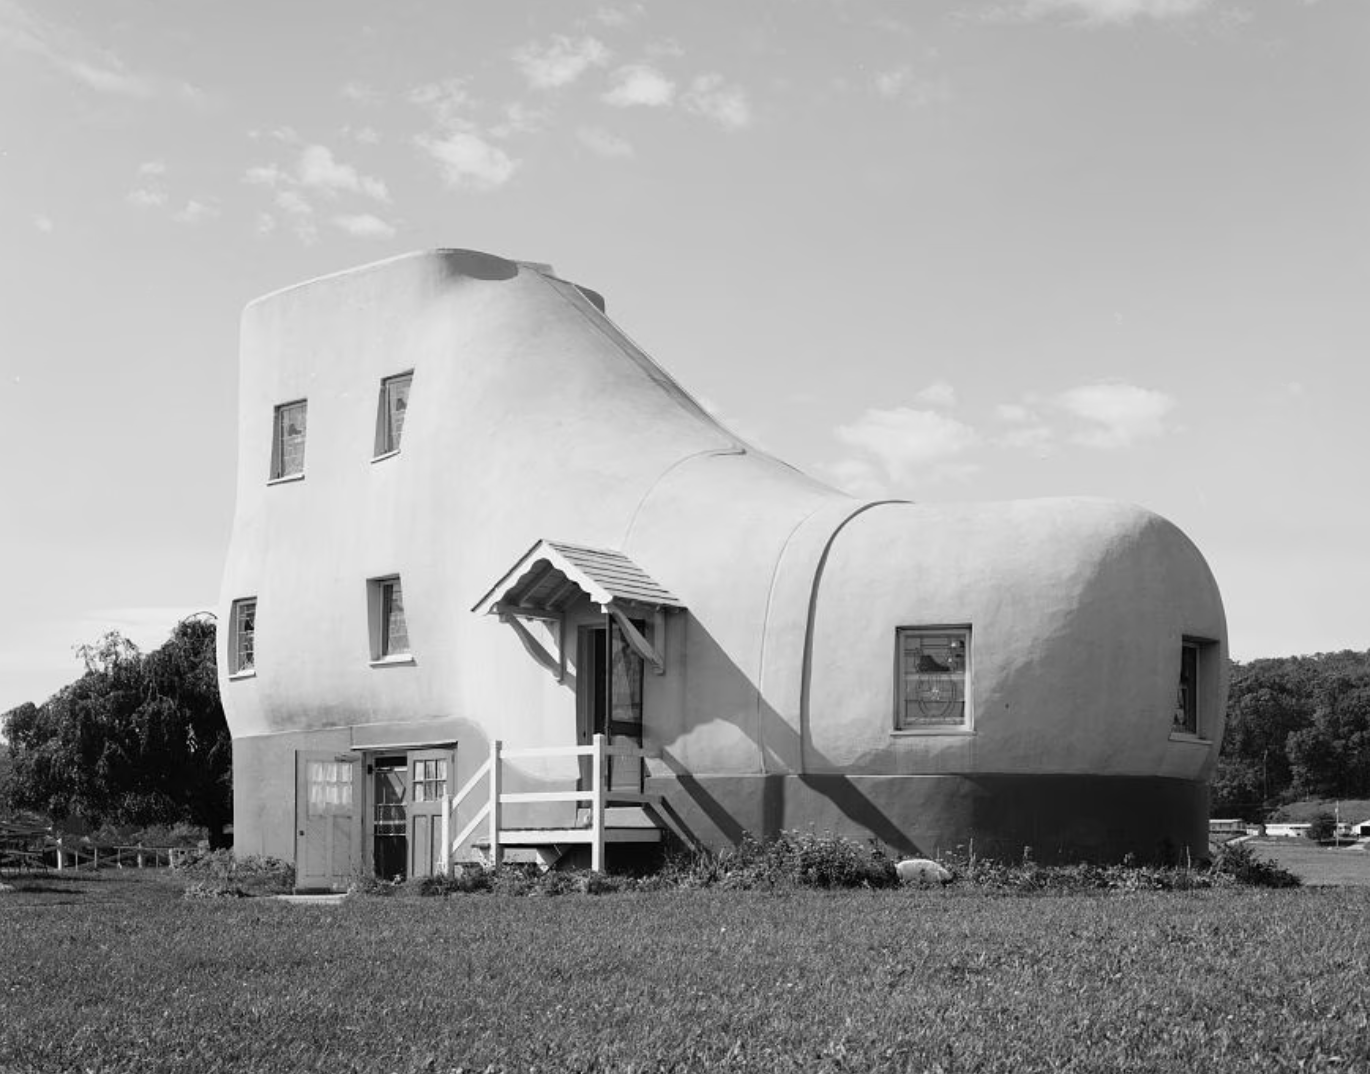 A house shaped like a shoe in Hellam township, PA